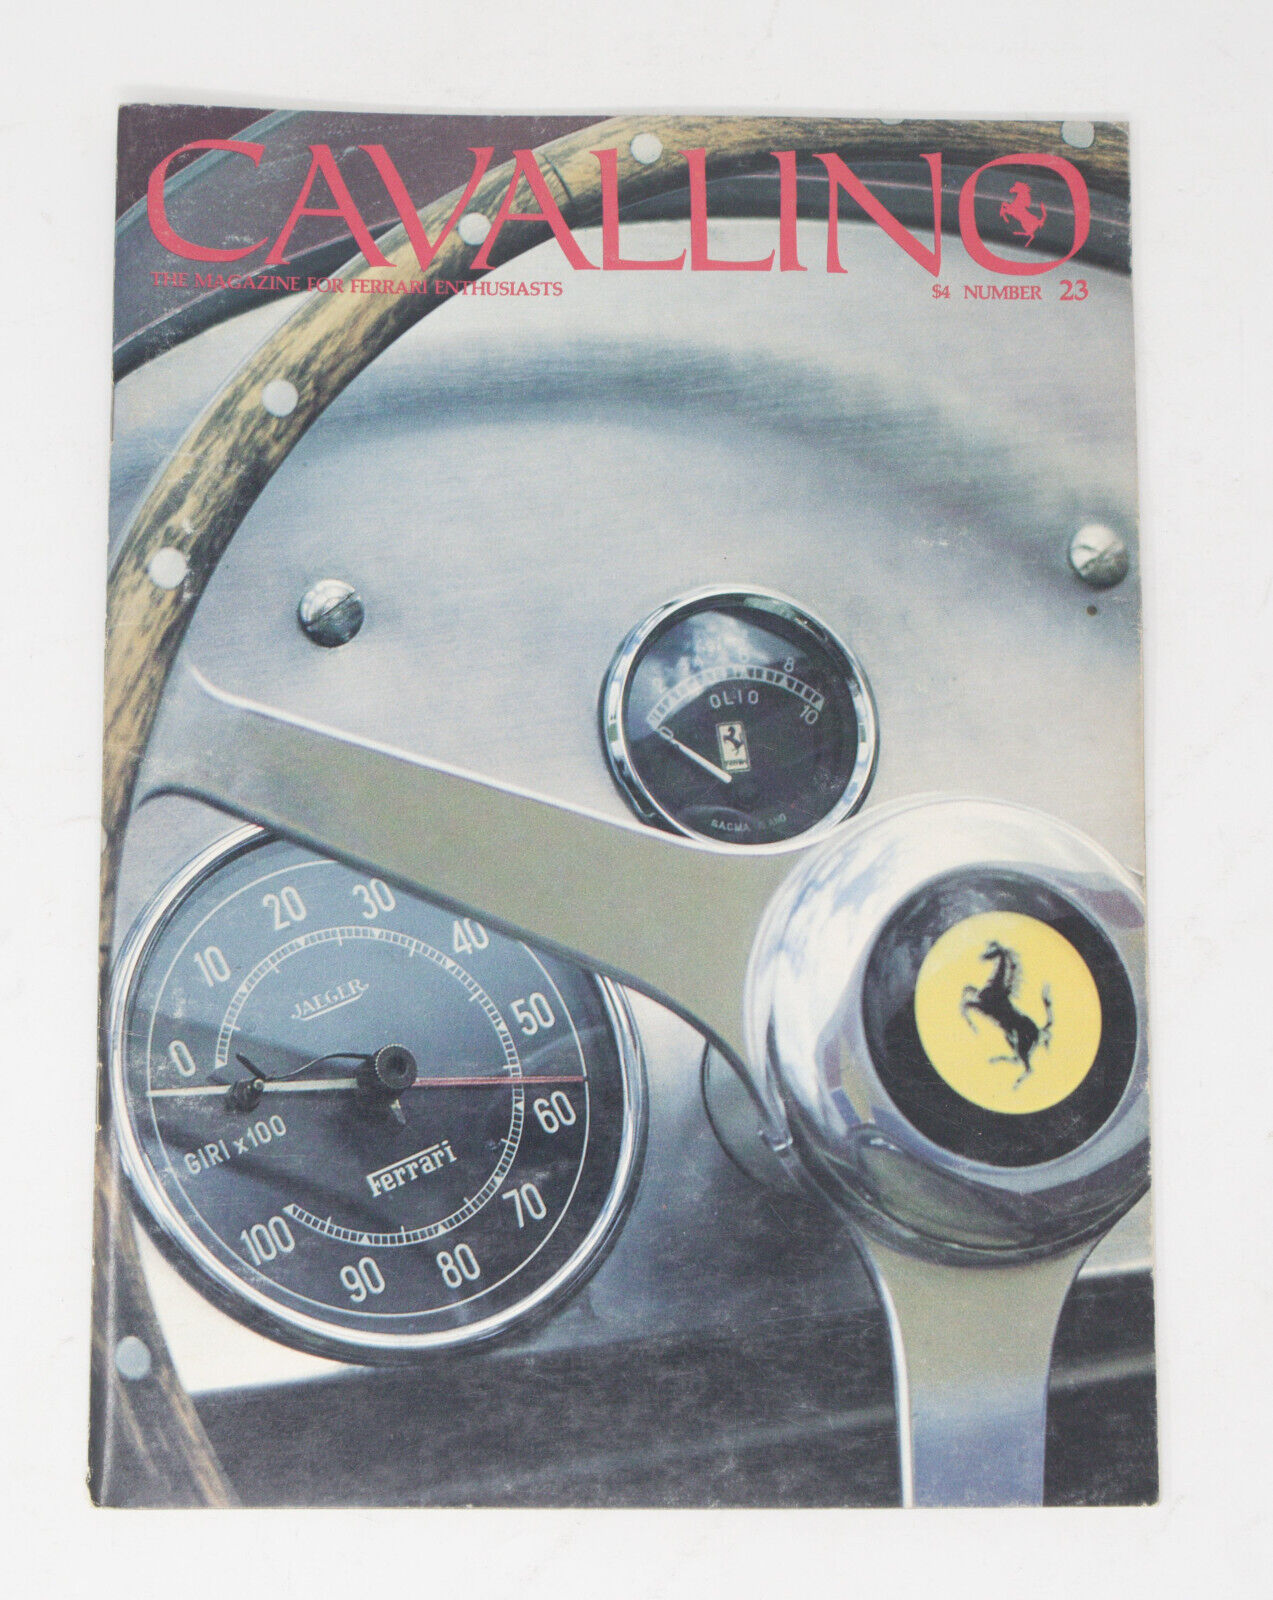 Cavallino magazine No. 23 September/October 1984 288 GTO